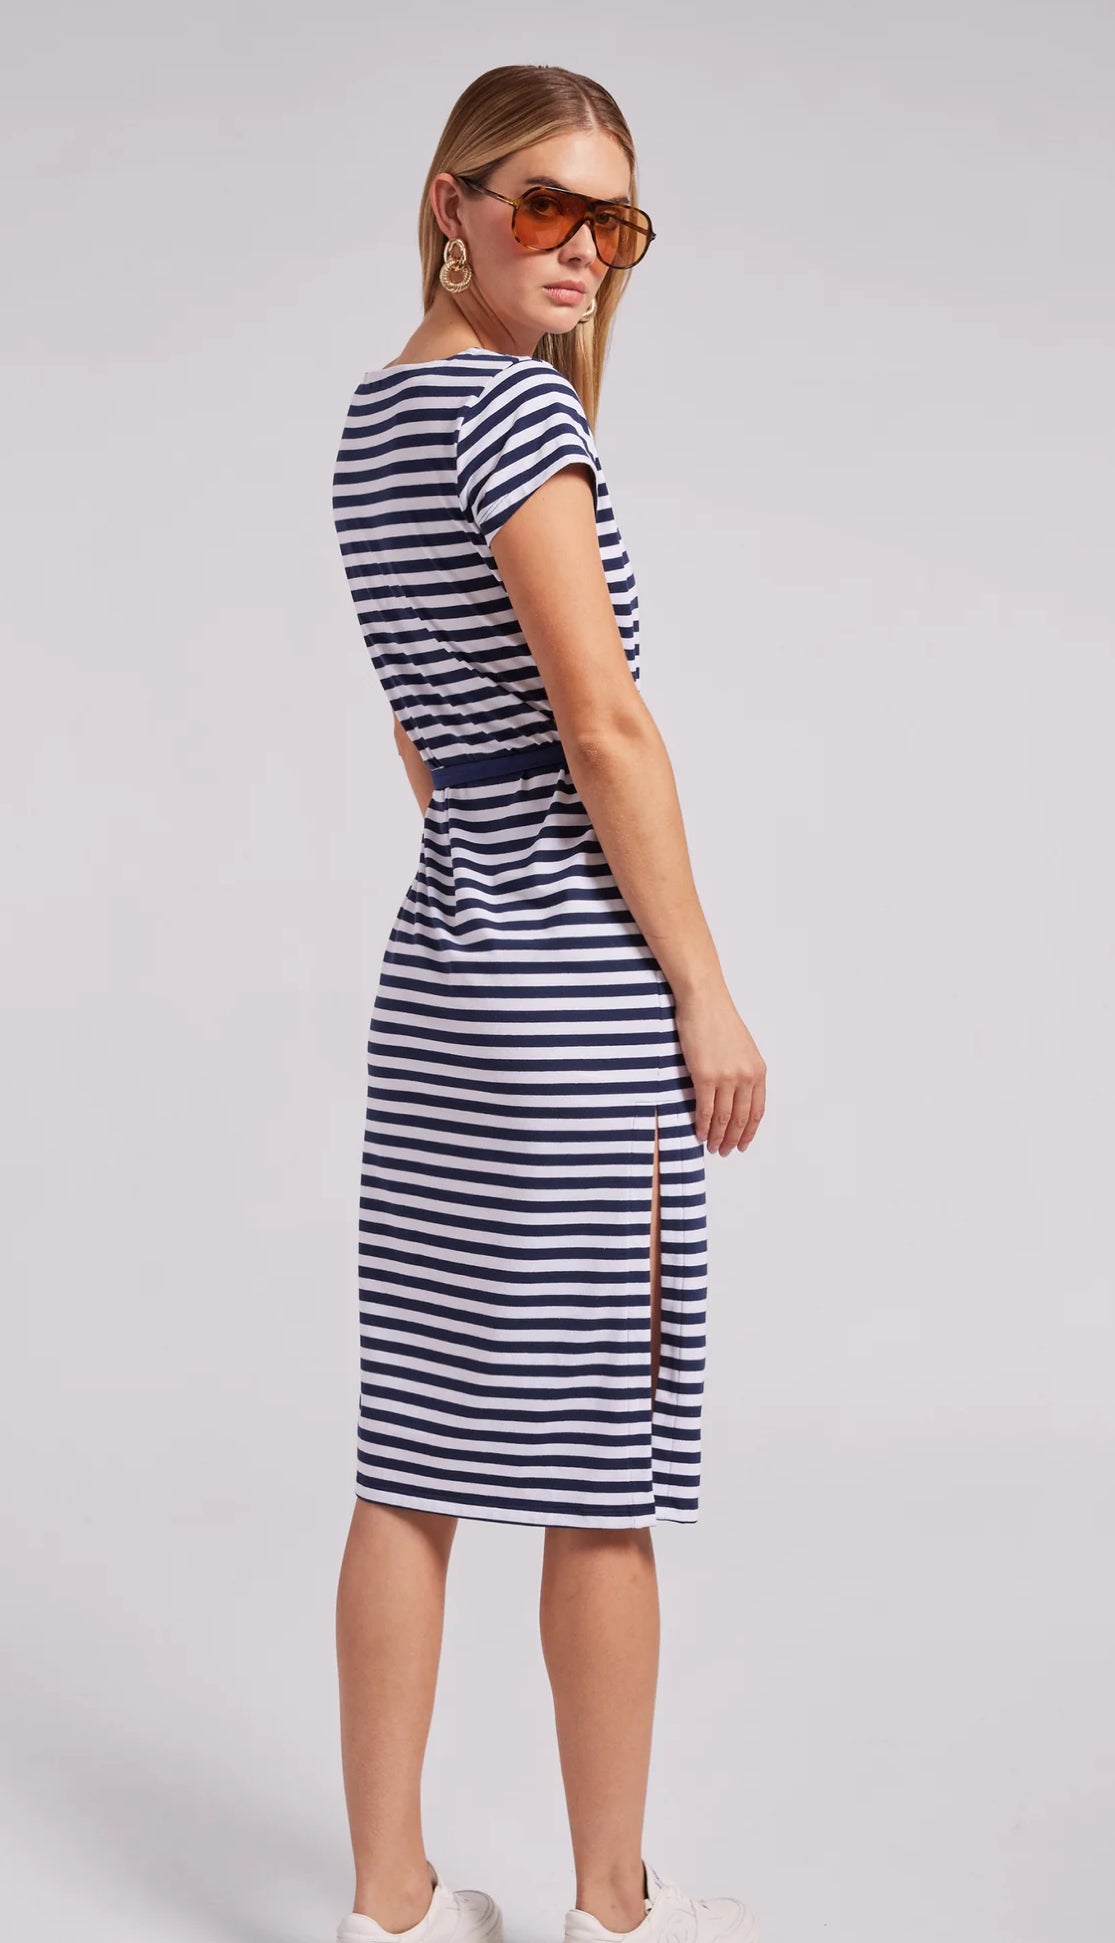 Palmero Stripe Dress